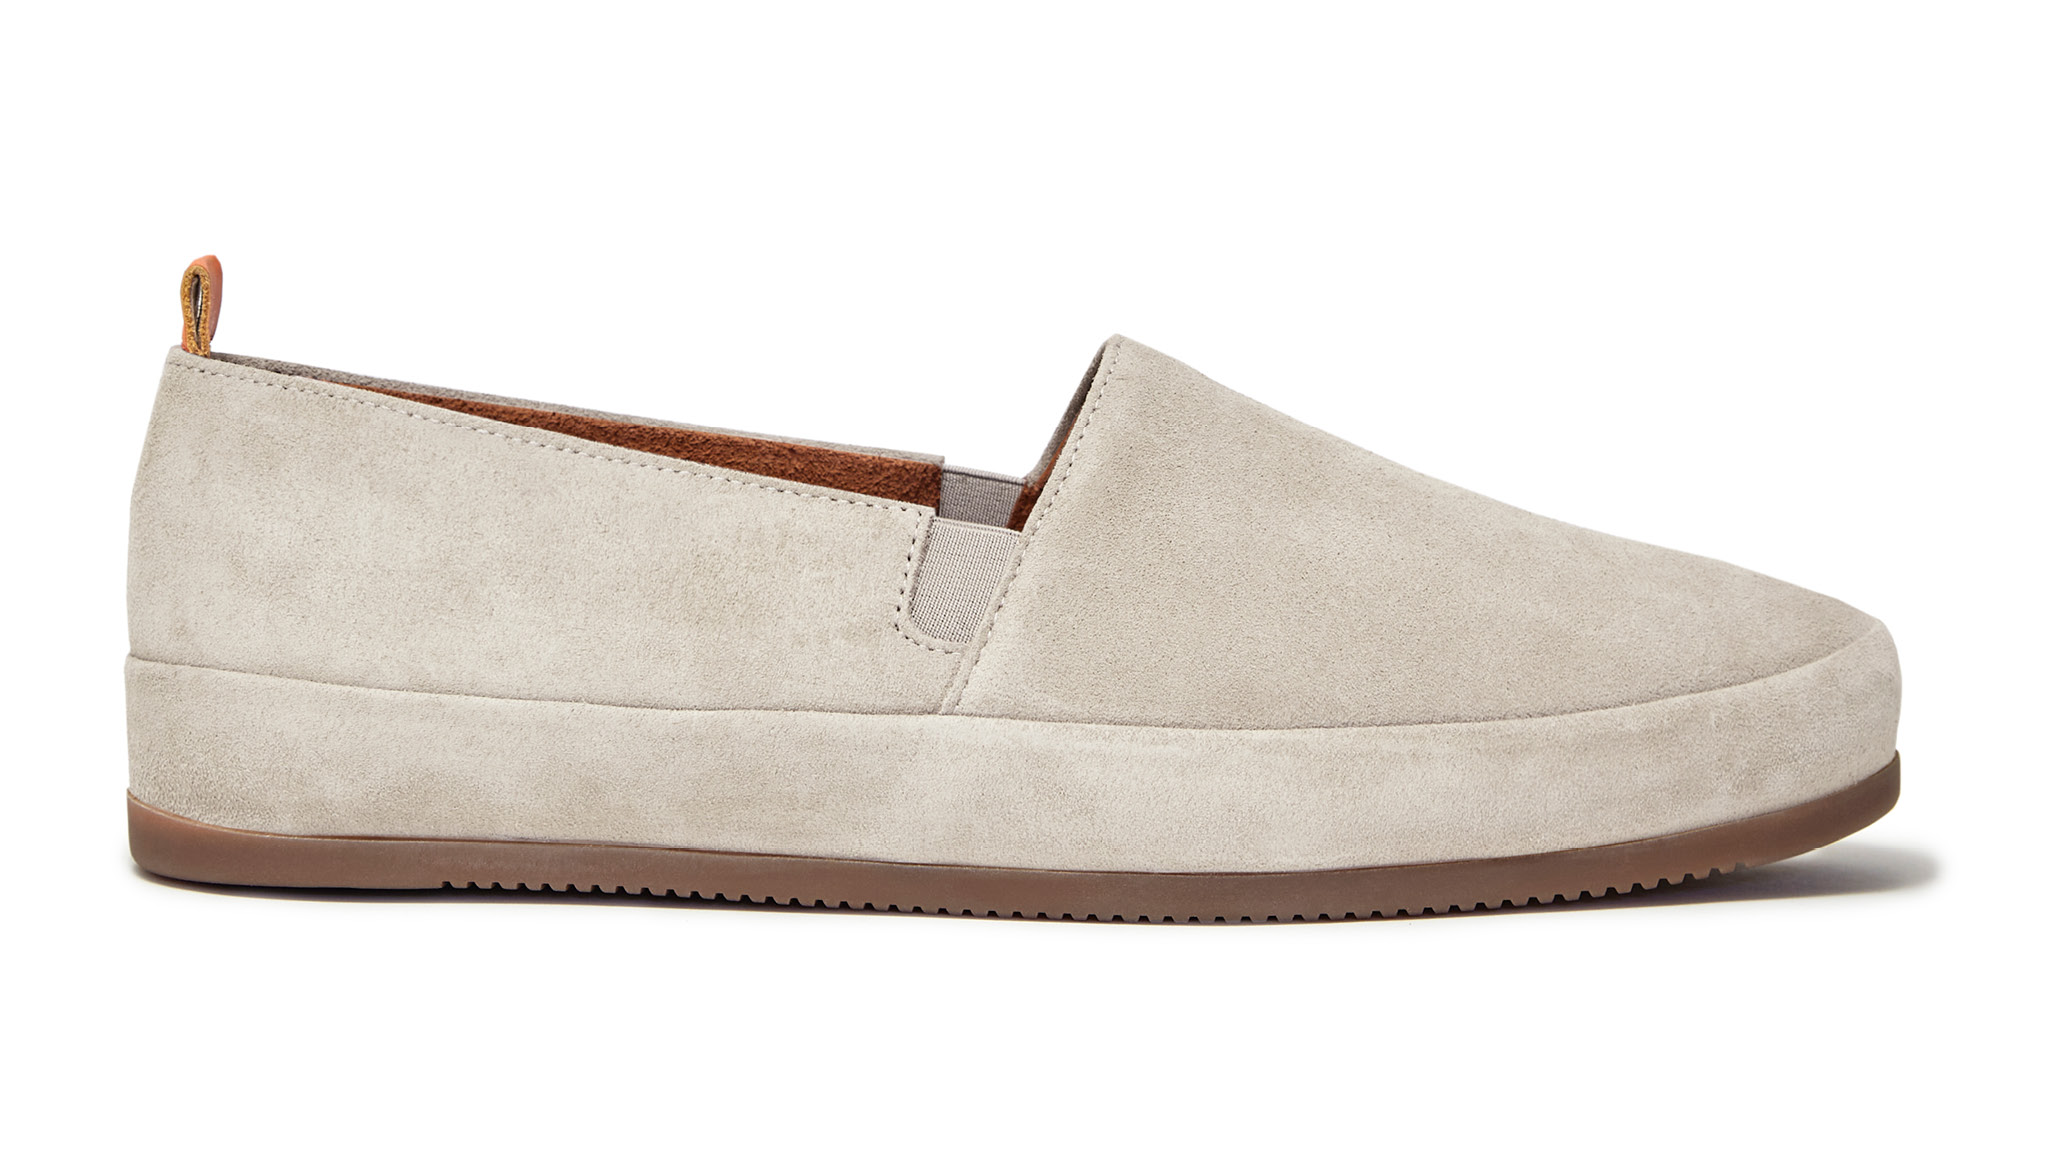 white loafer shoes for men